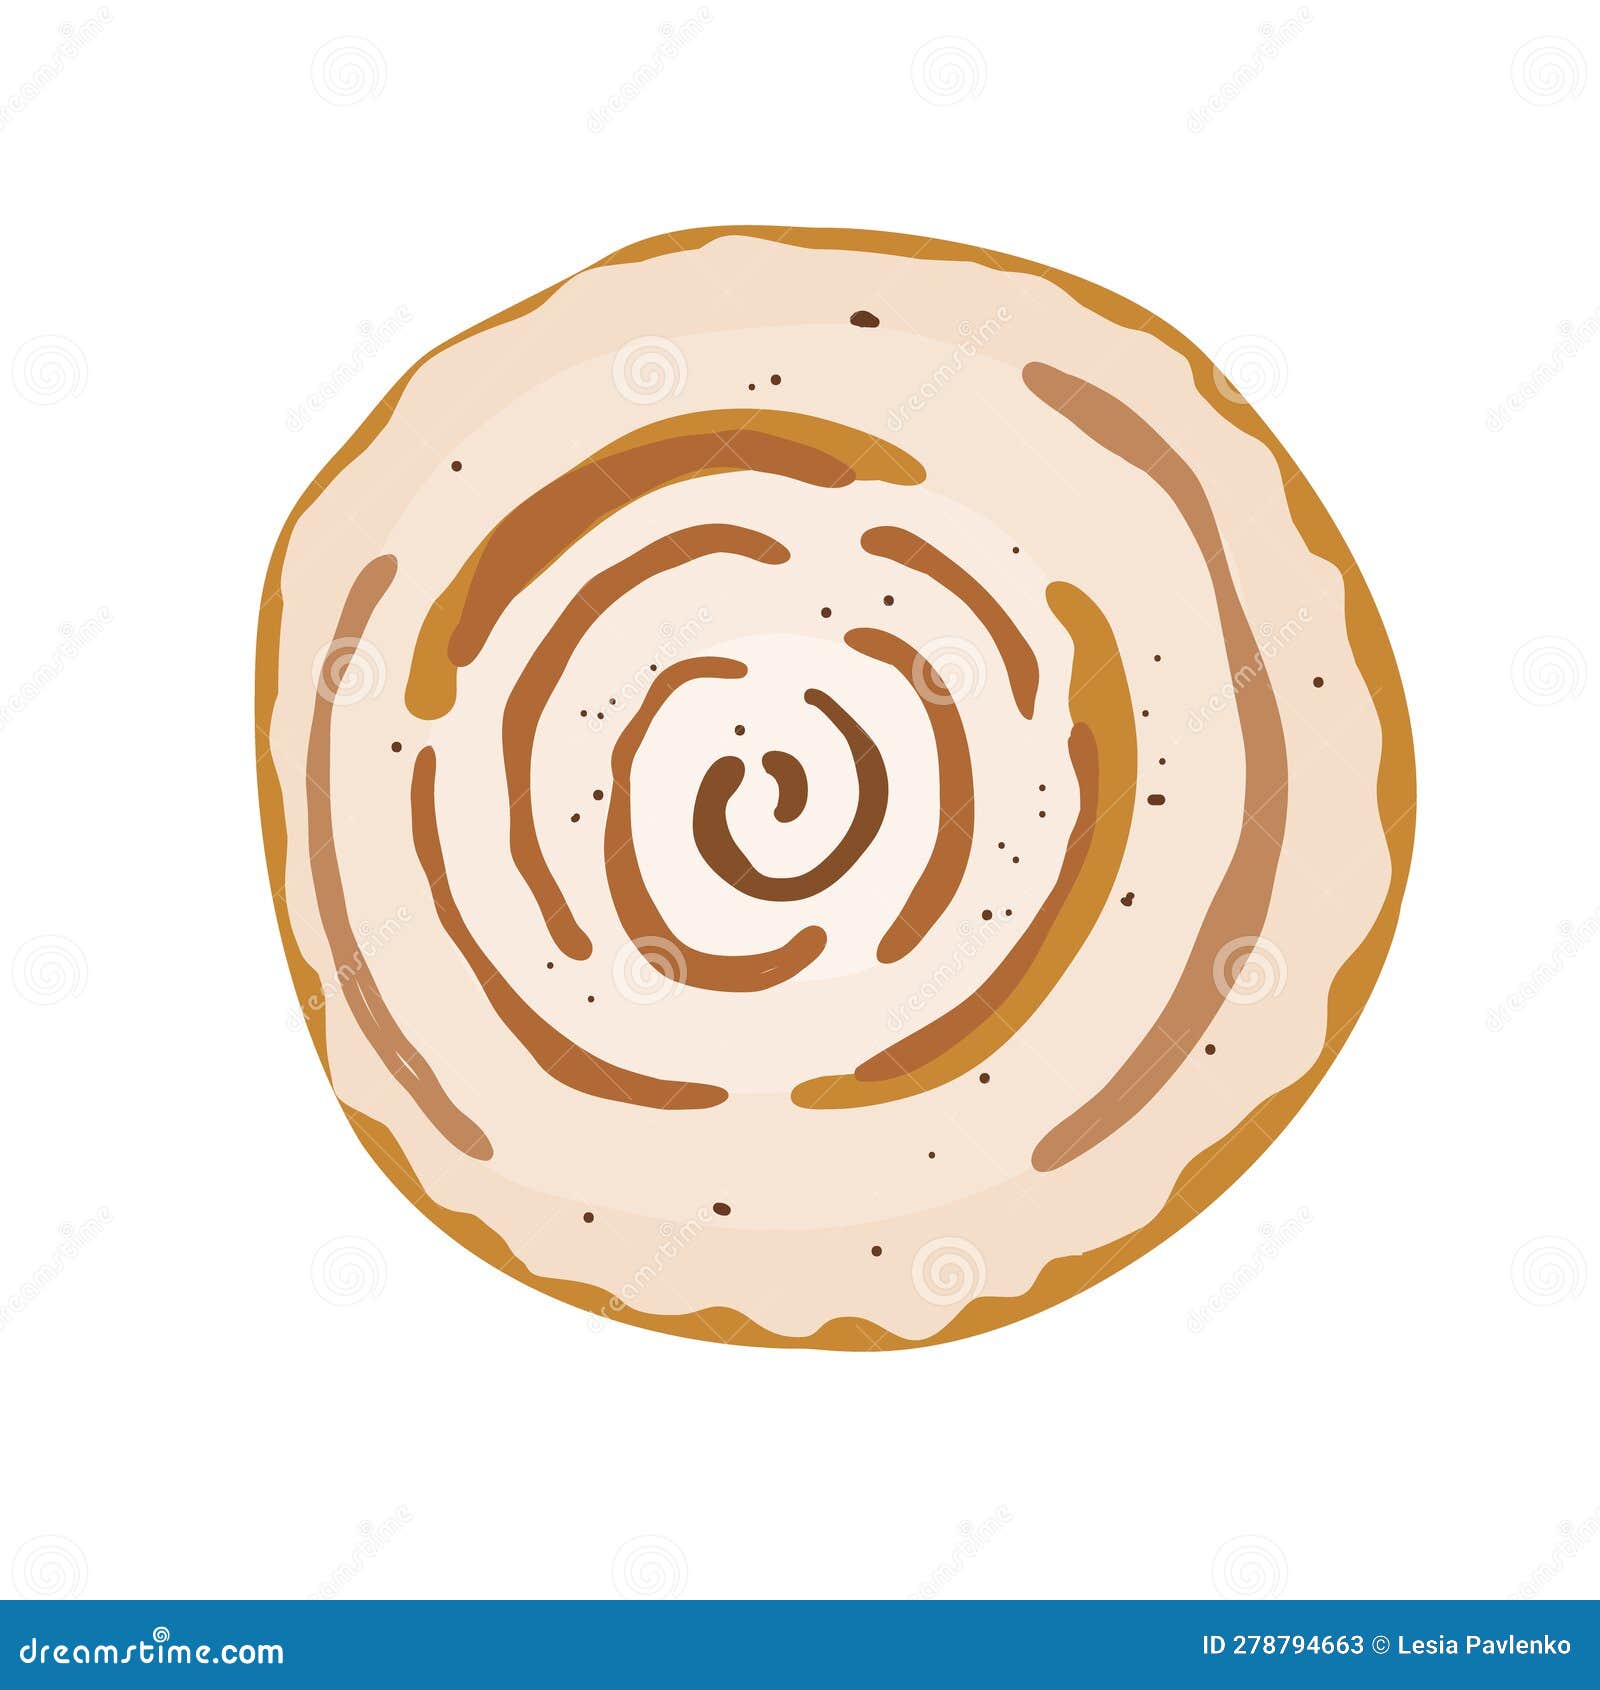 cinnamon roll or kanelbulle icon.   in cartoon style